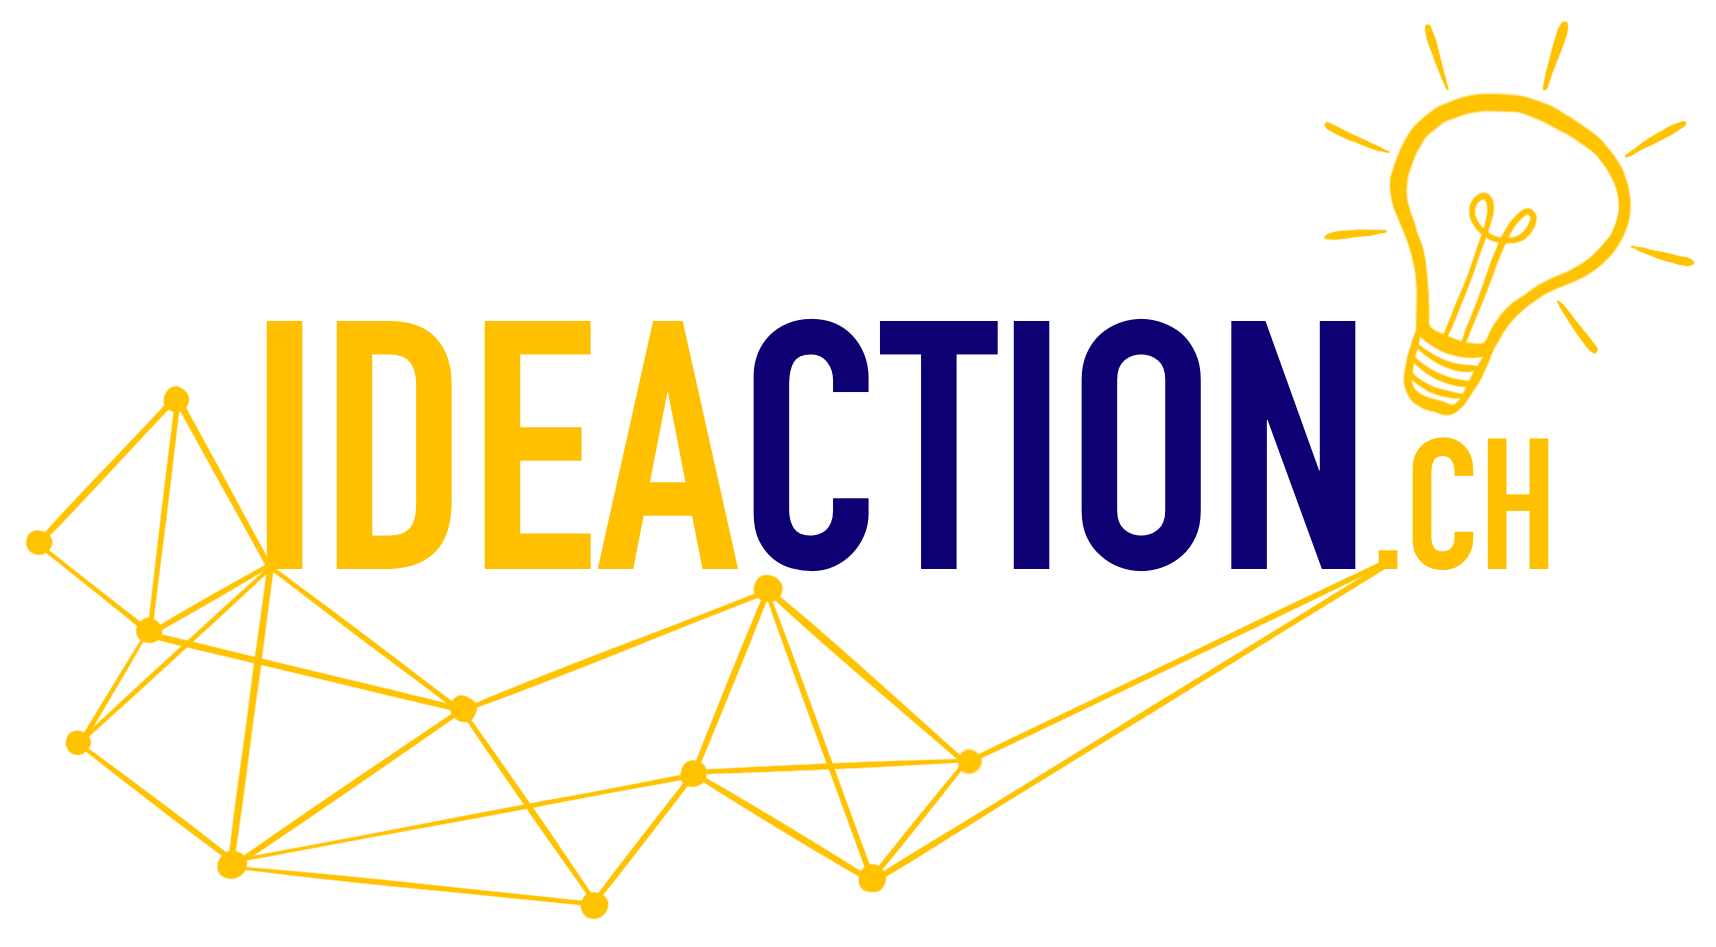 Ideaction Logo